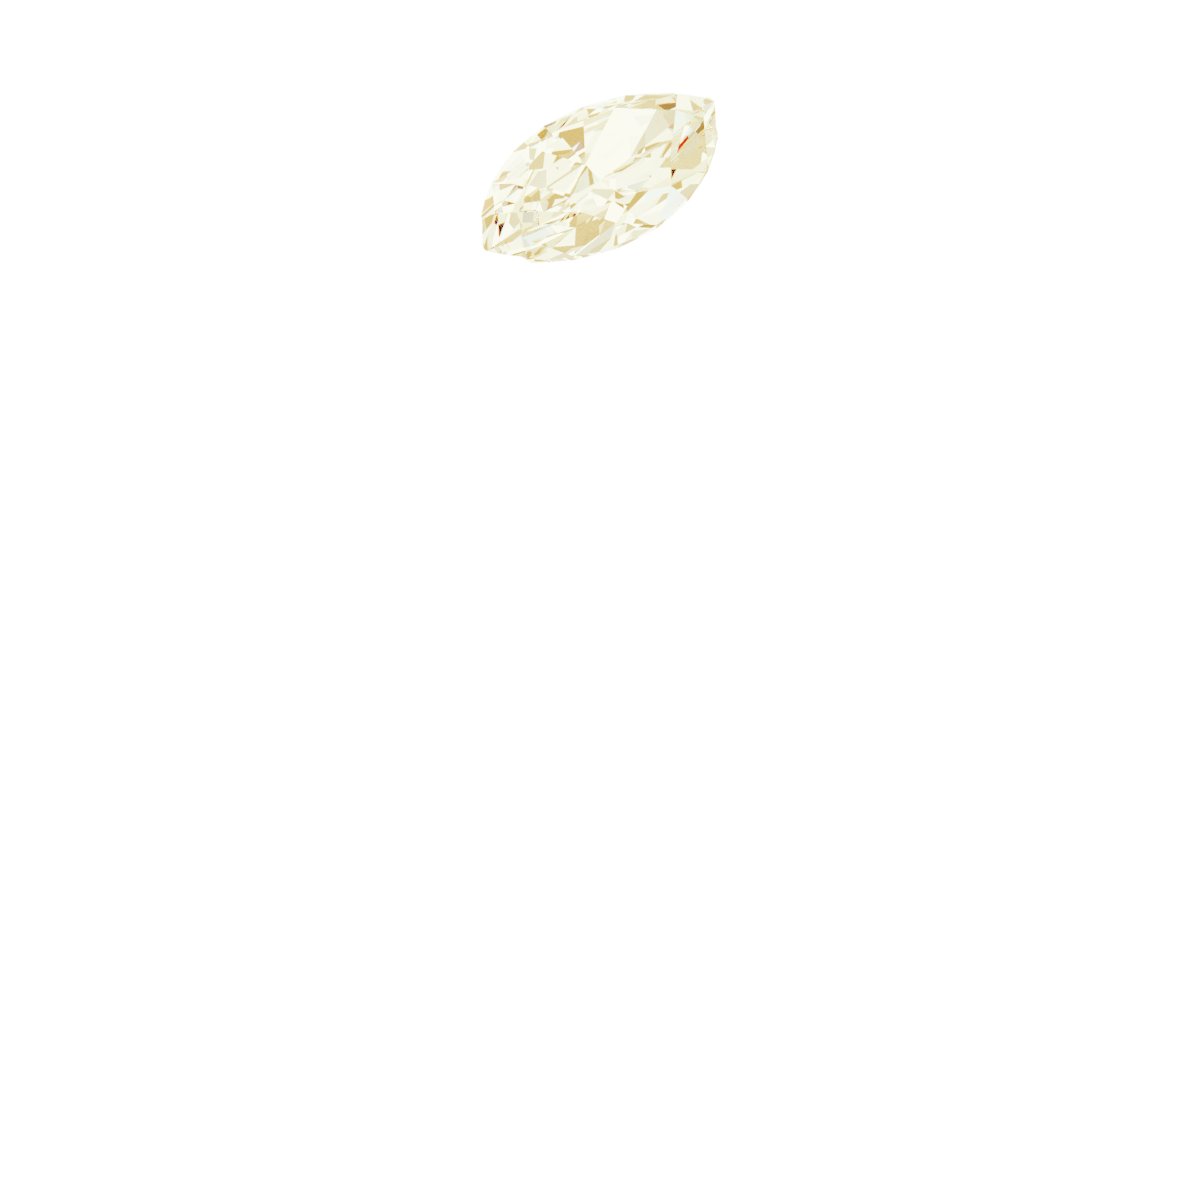 https://meteor.stullercloud.com/das/74274621?obj=stones/diamonds/g_Center&obj=metals&obj=metals&obj.recipe=yellow&$xlarge$